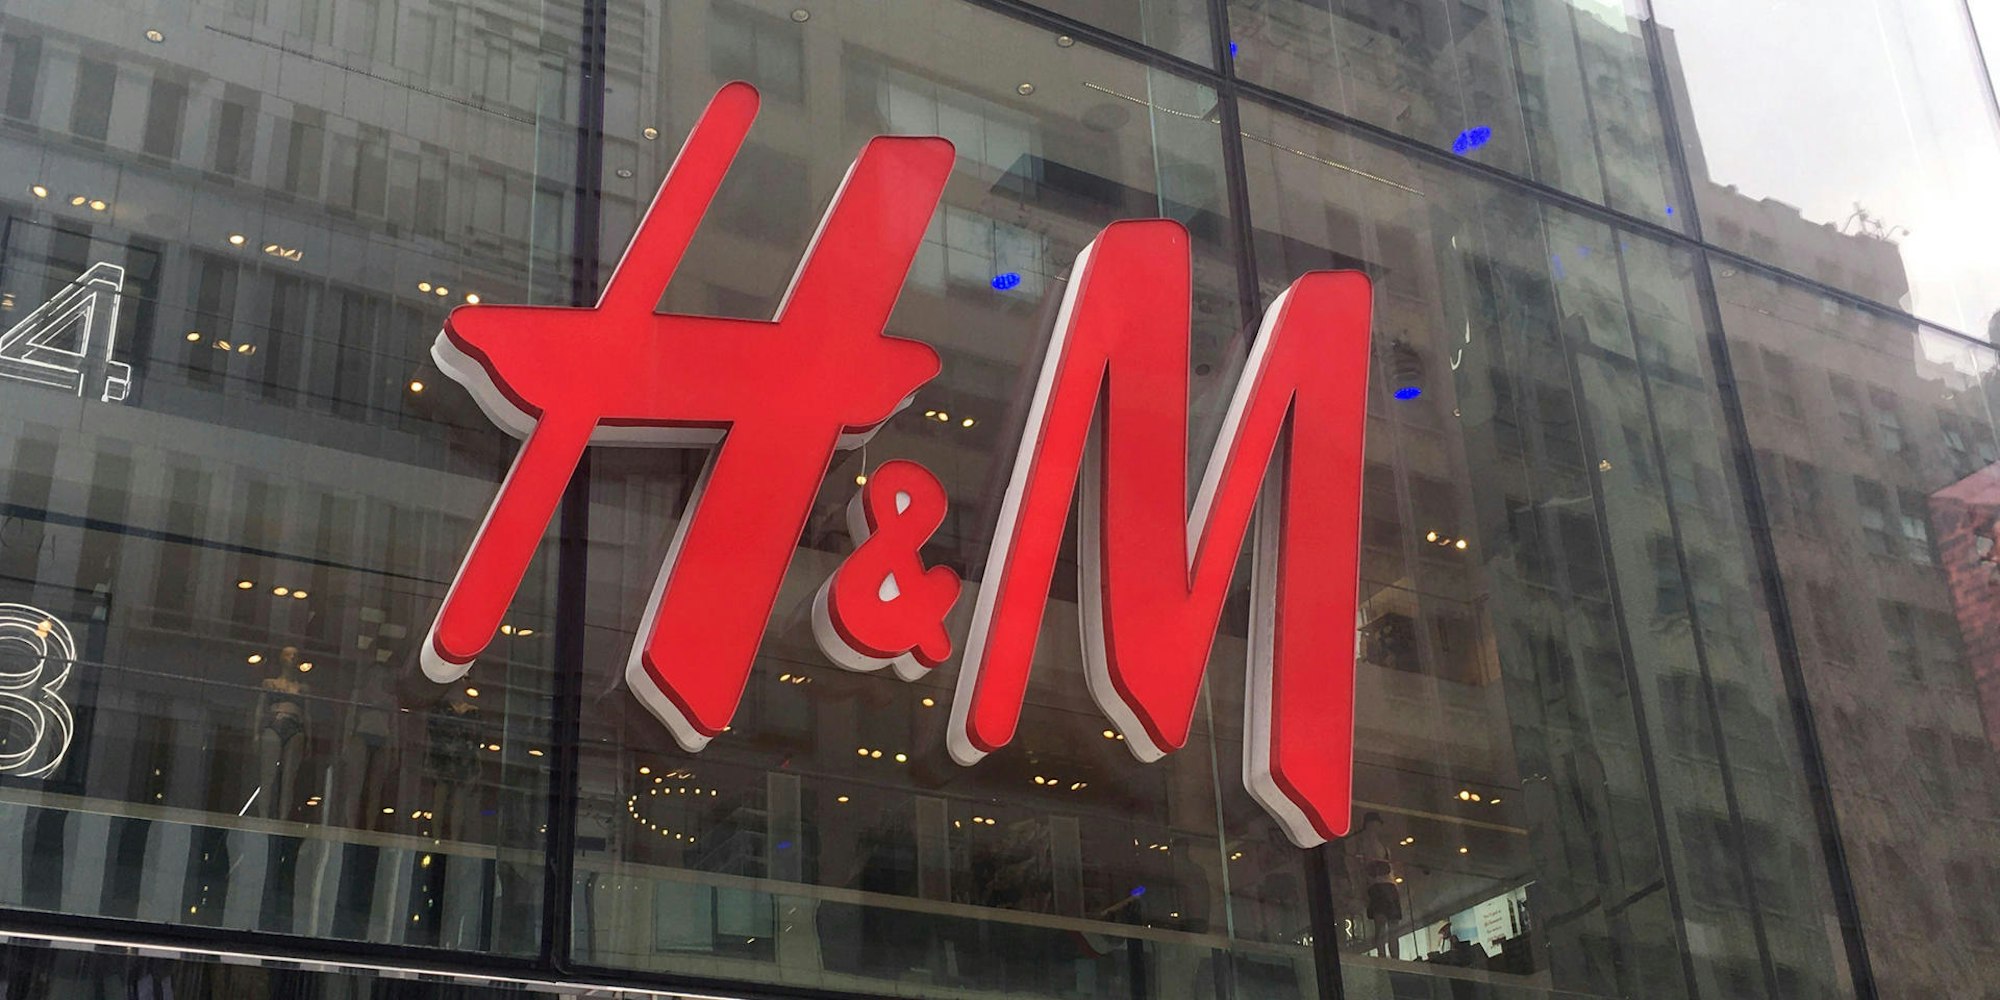 H&M Manhattan (1)